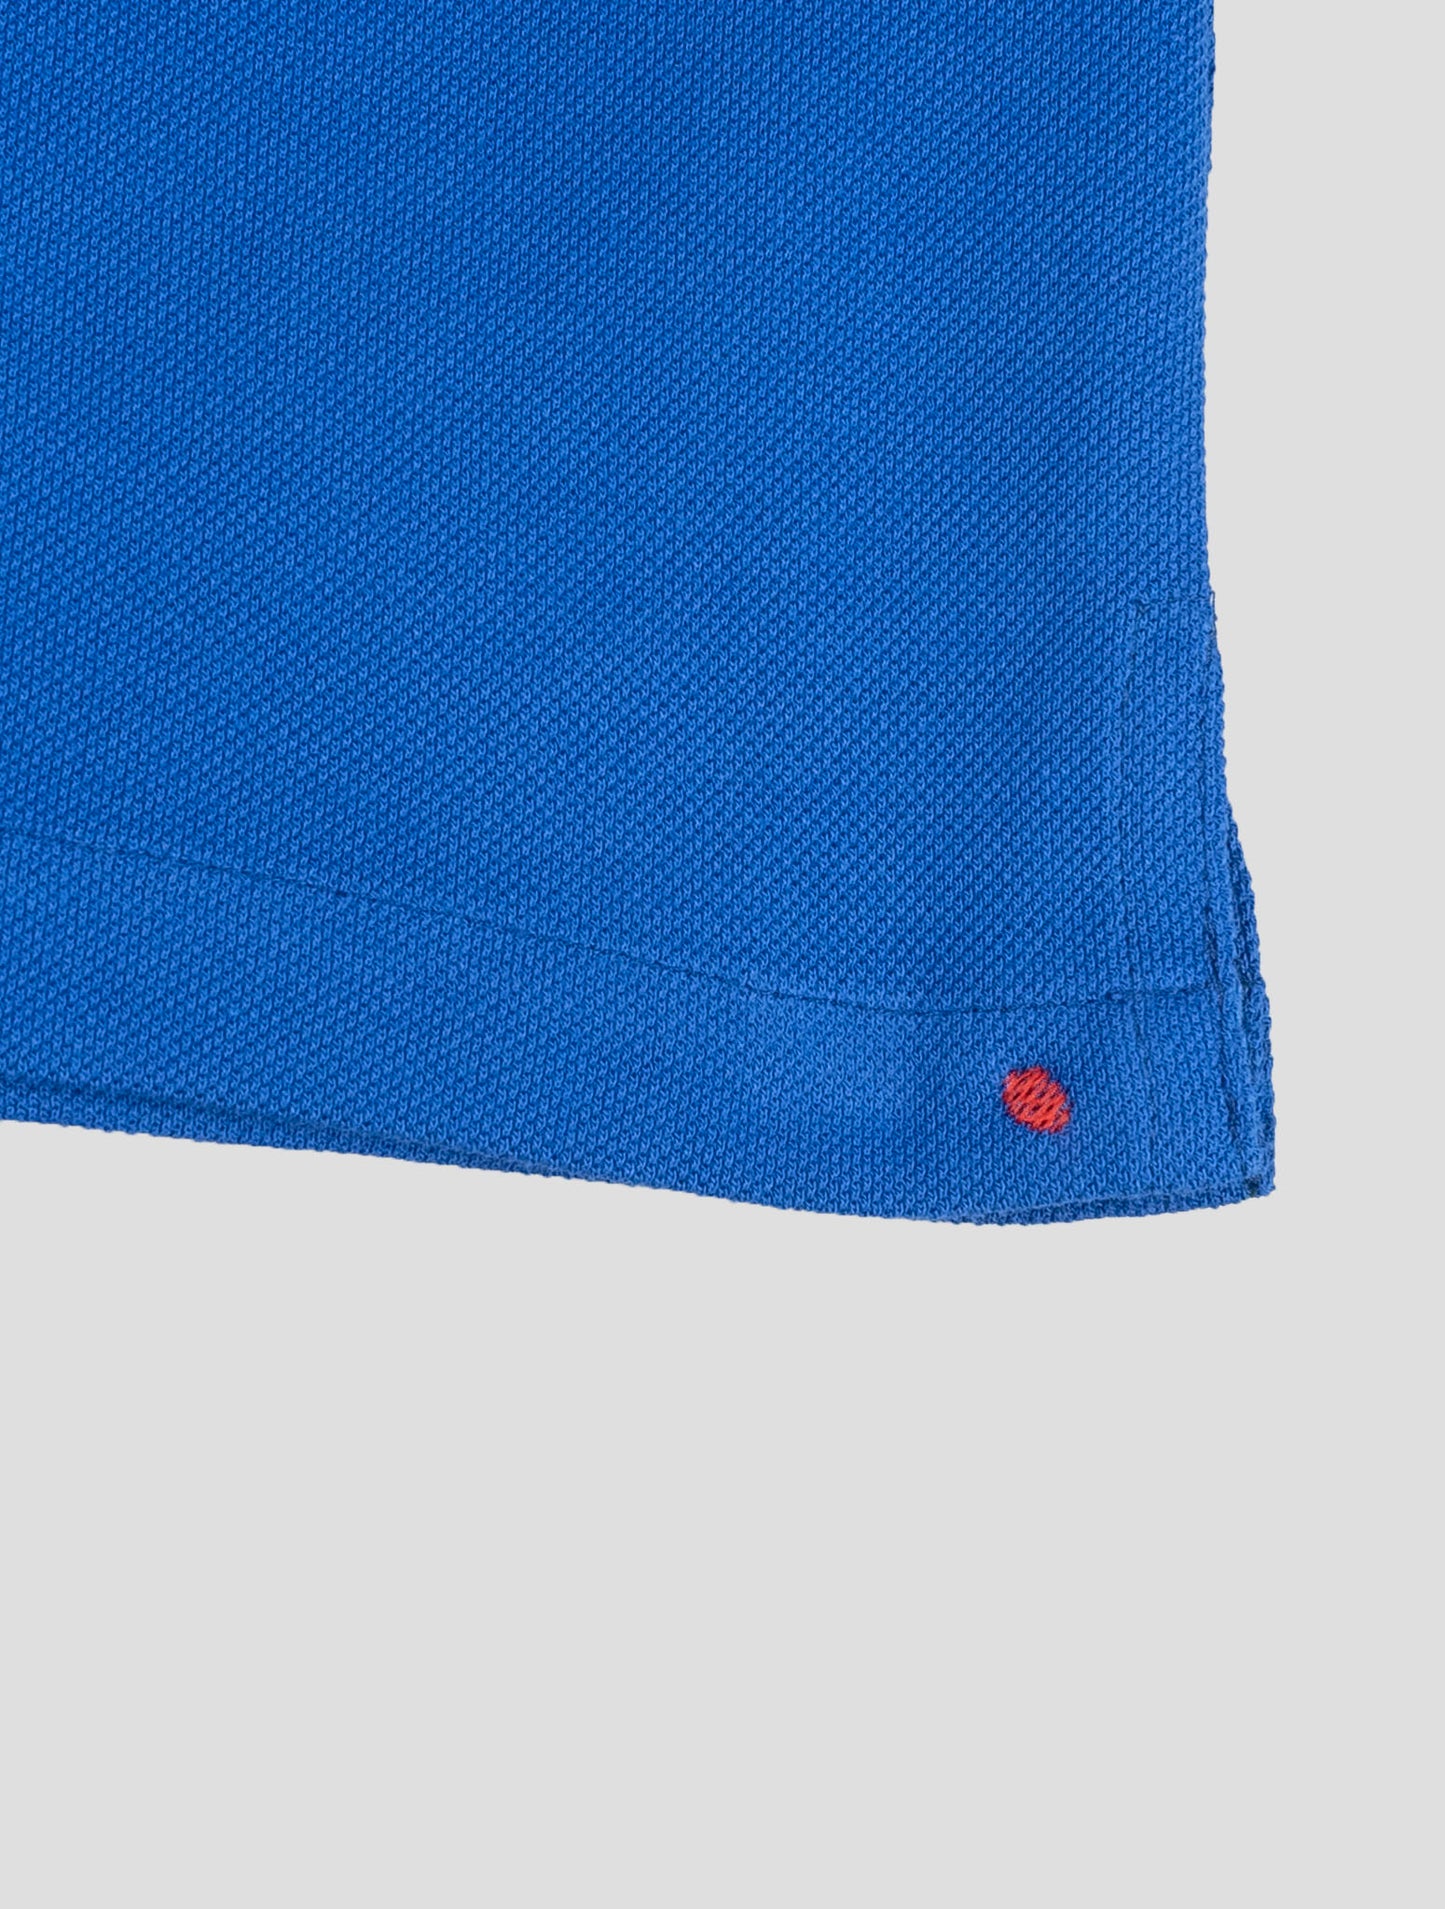 Tenue Kiton-Survêtement Pantalon court Umbi Noir et Bleu